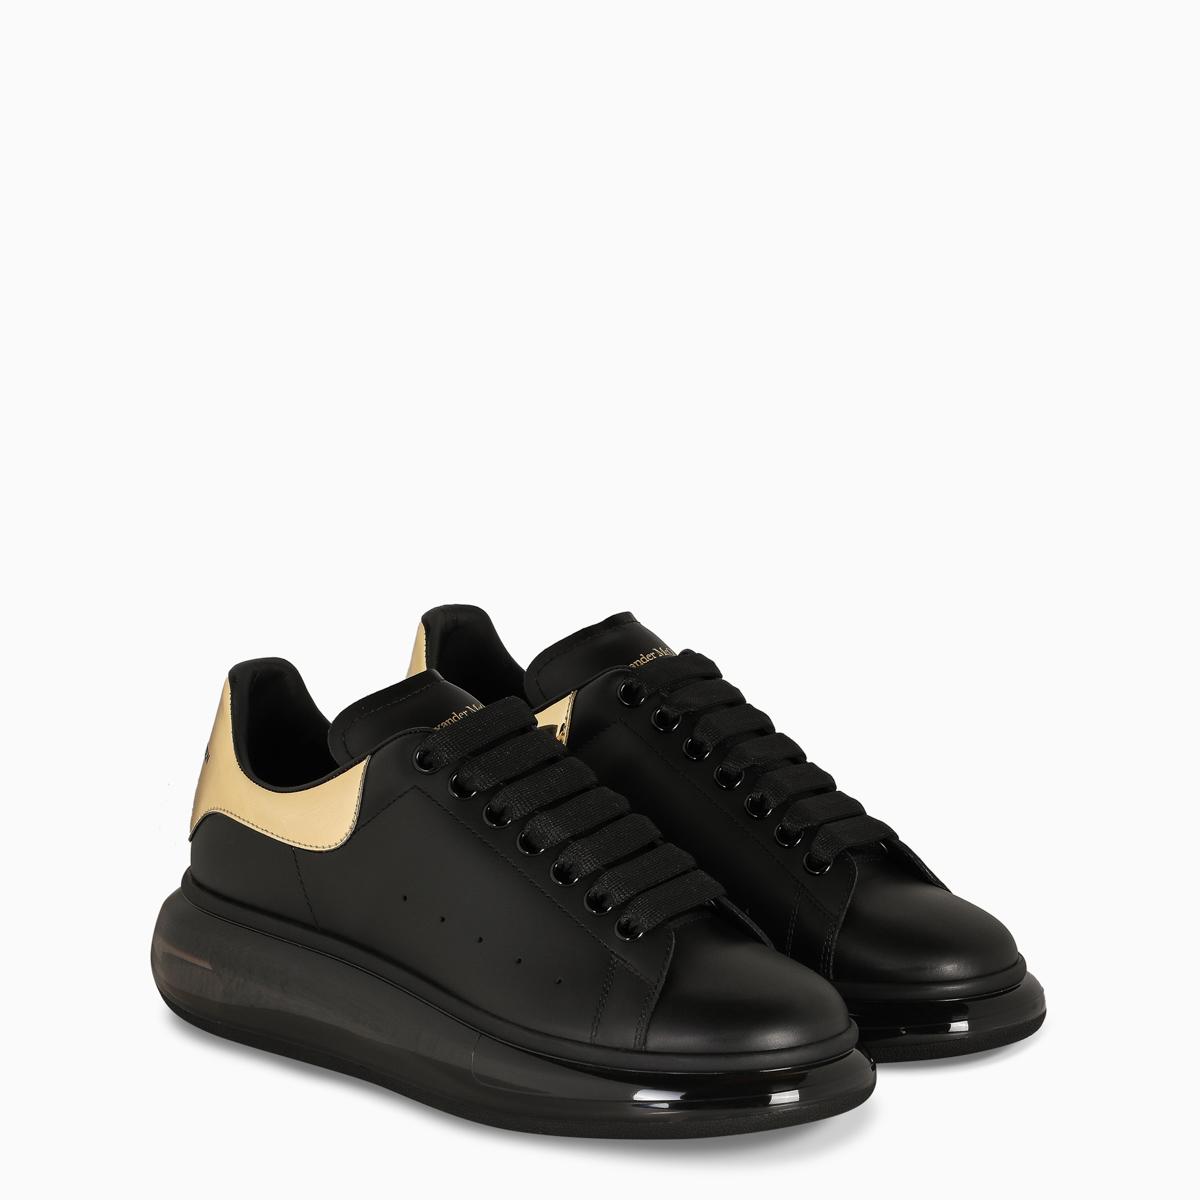 Alexander McQueen Oversized Leather Sneakers Black/gold for Men - Lyst